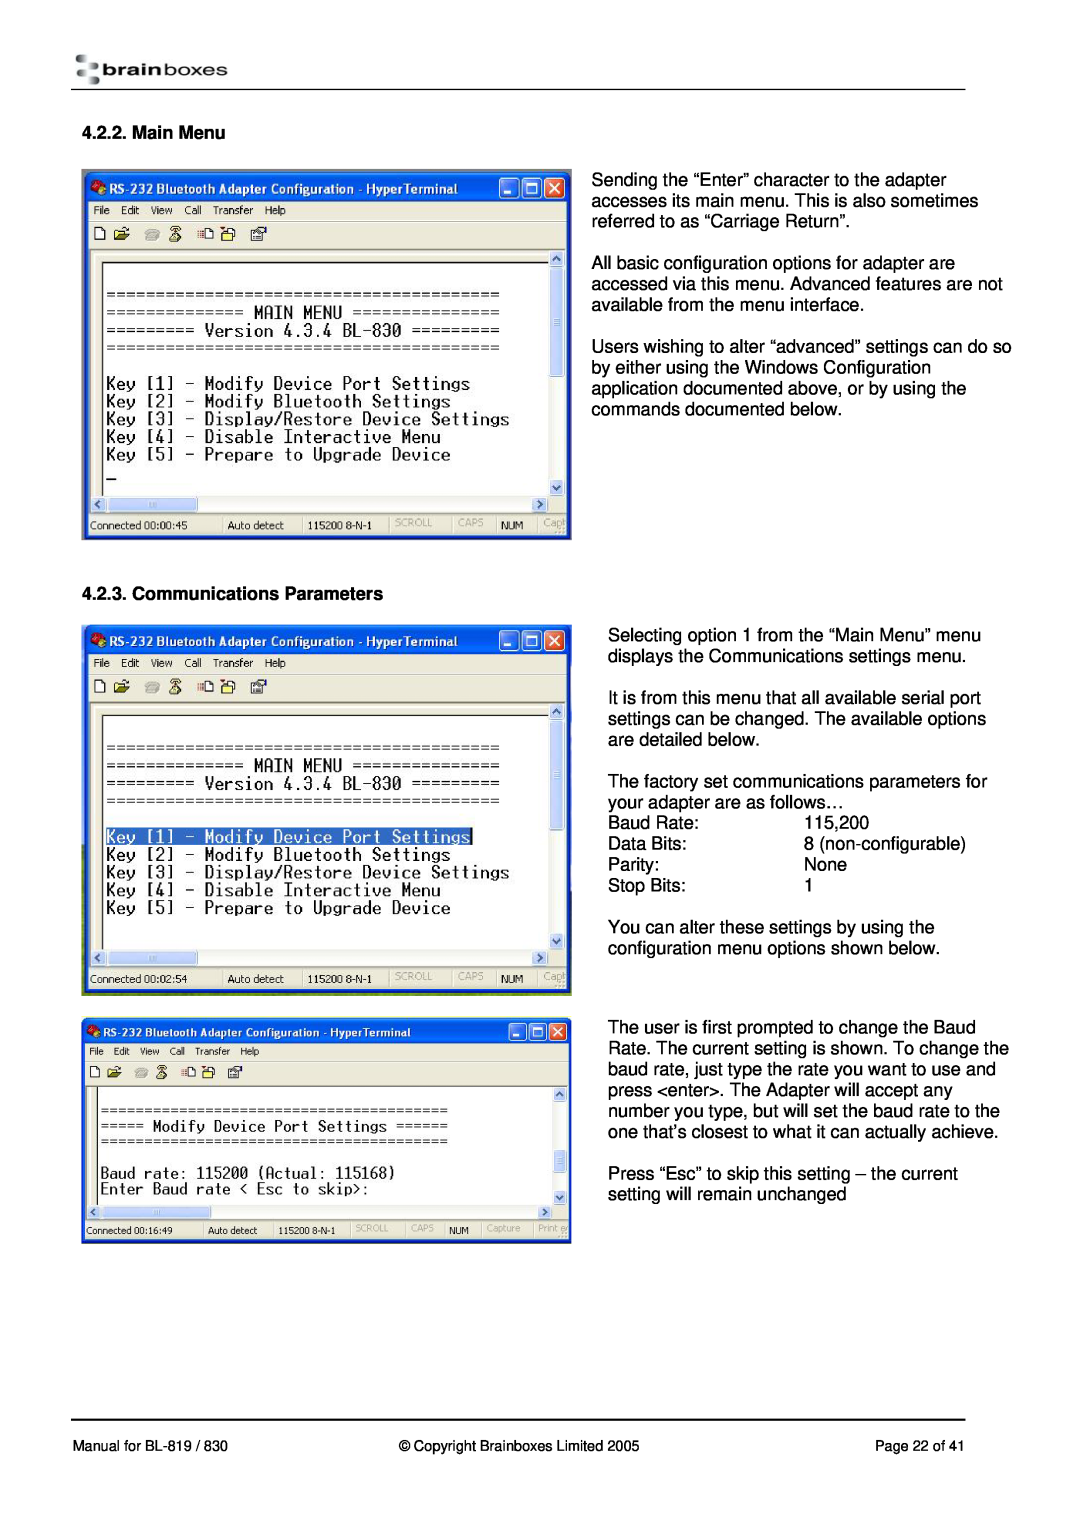 Brainboxes BL-830, BL-819 manual Main Menu, Communications Parameters, Page 22 of 